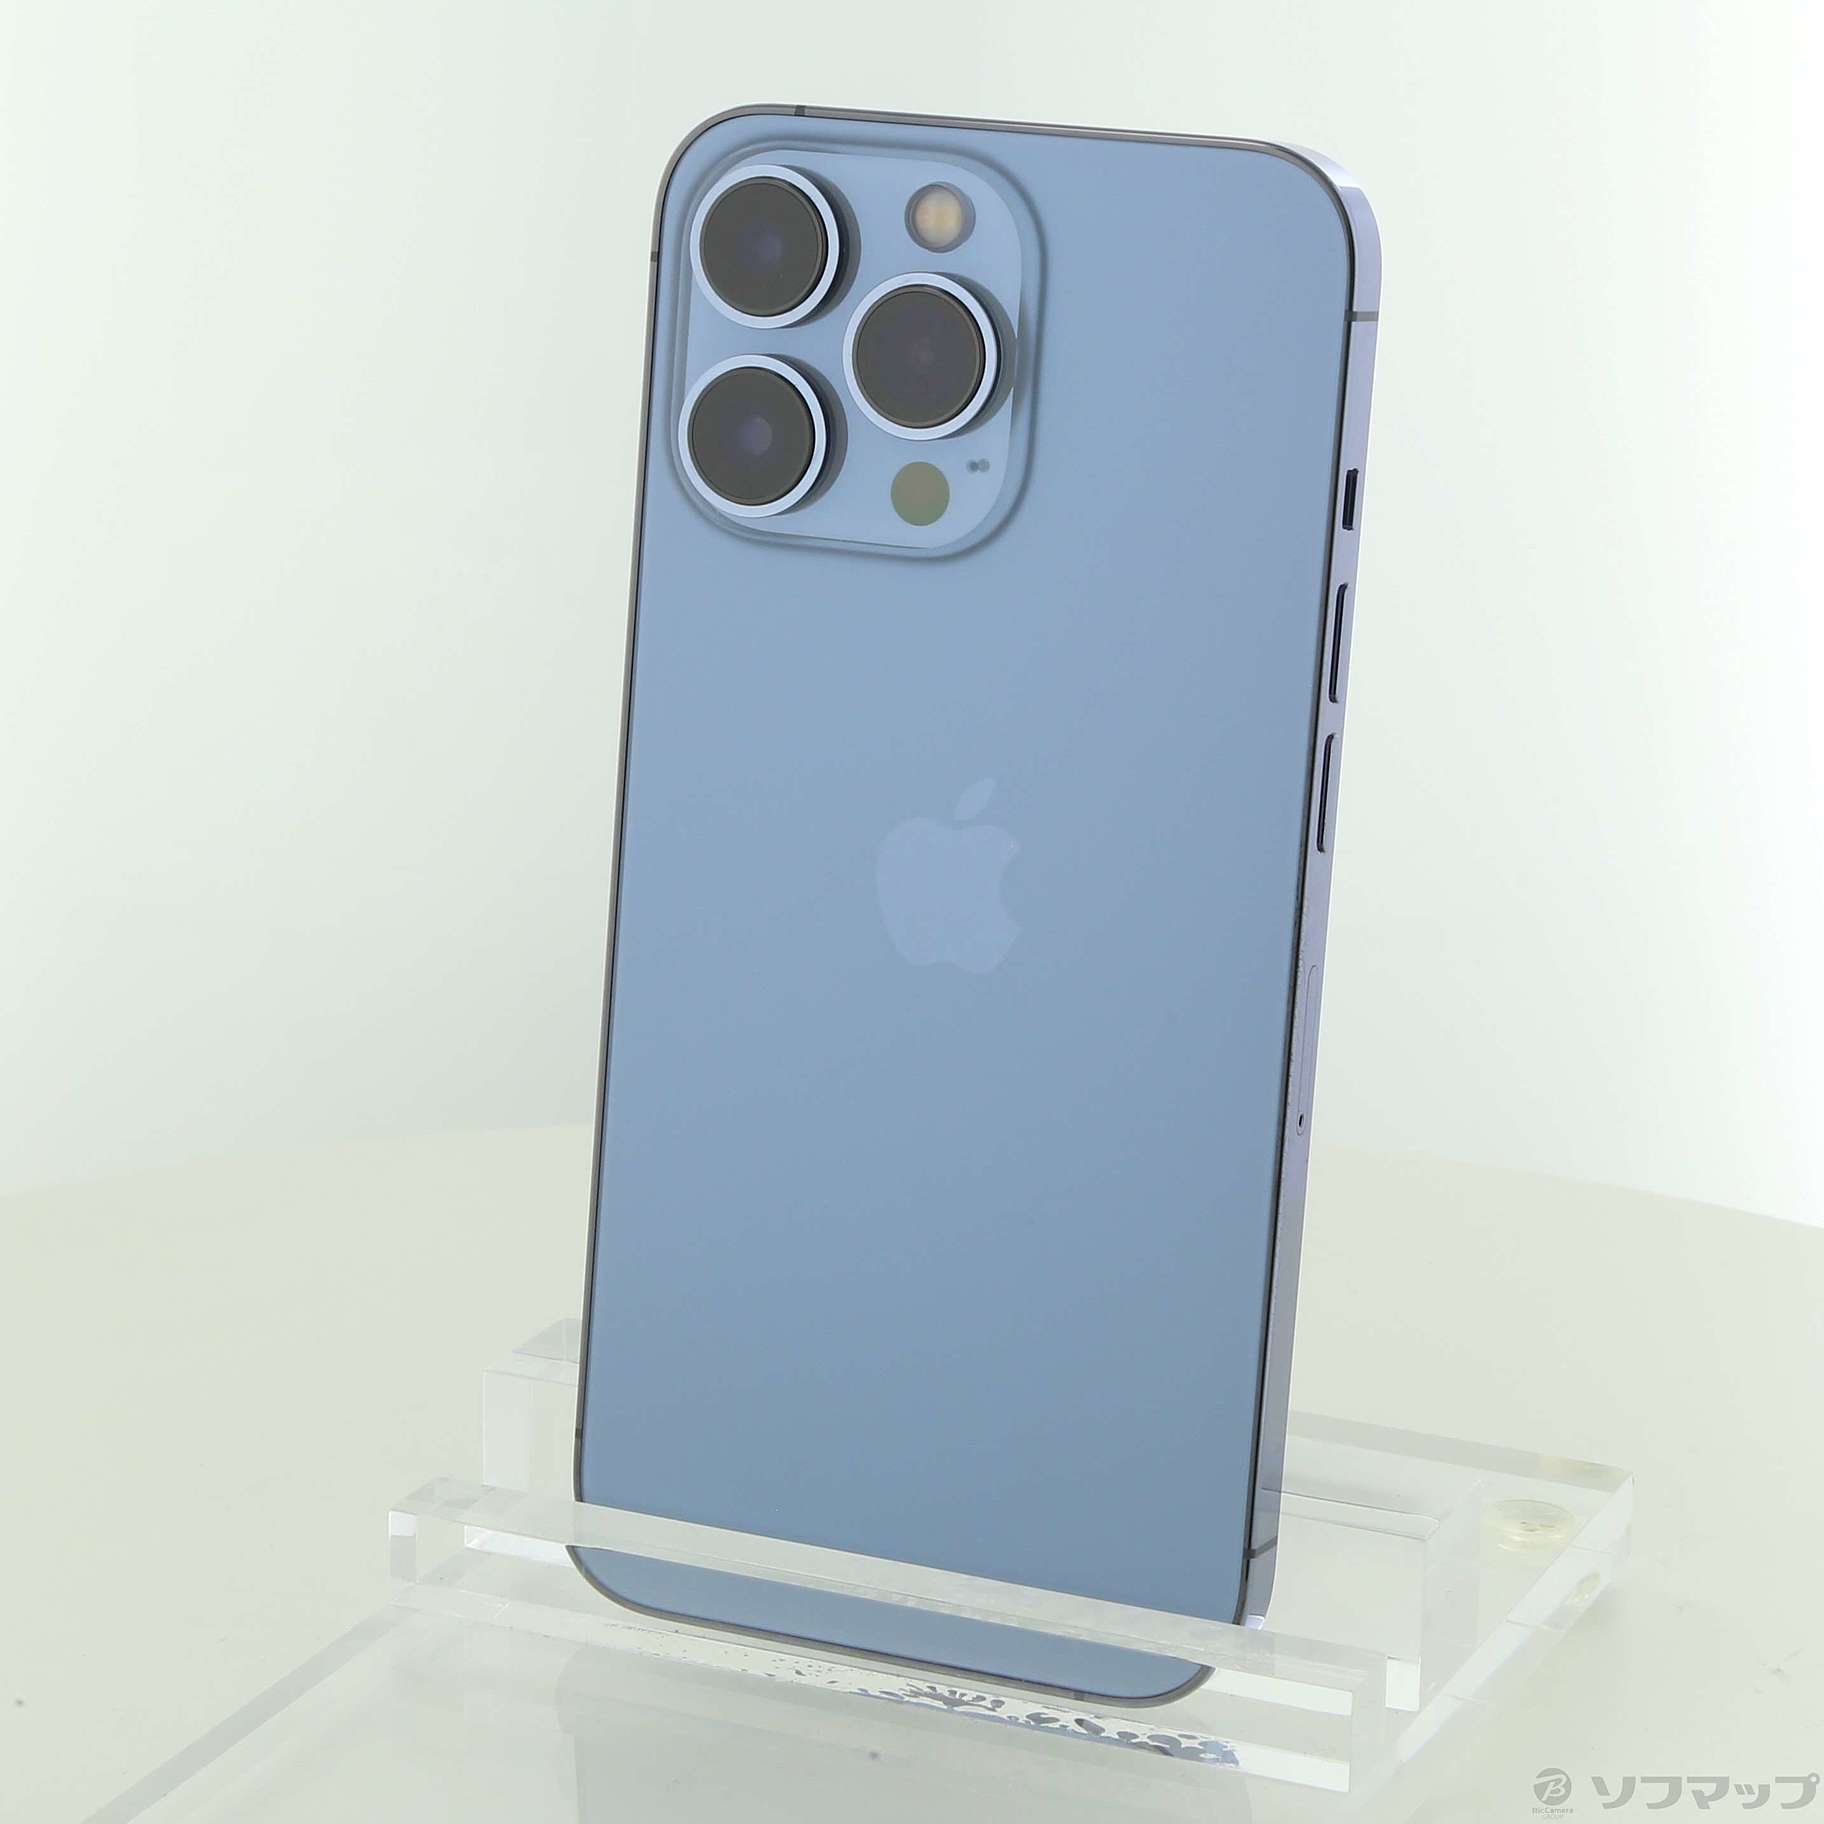 SIMフリー Pro シエラブルー新品 256GB 【2台】iPhone 13 - nimfomane.com